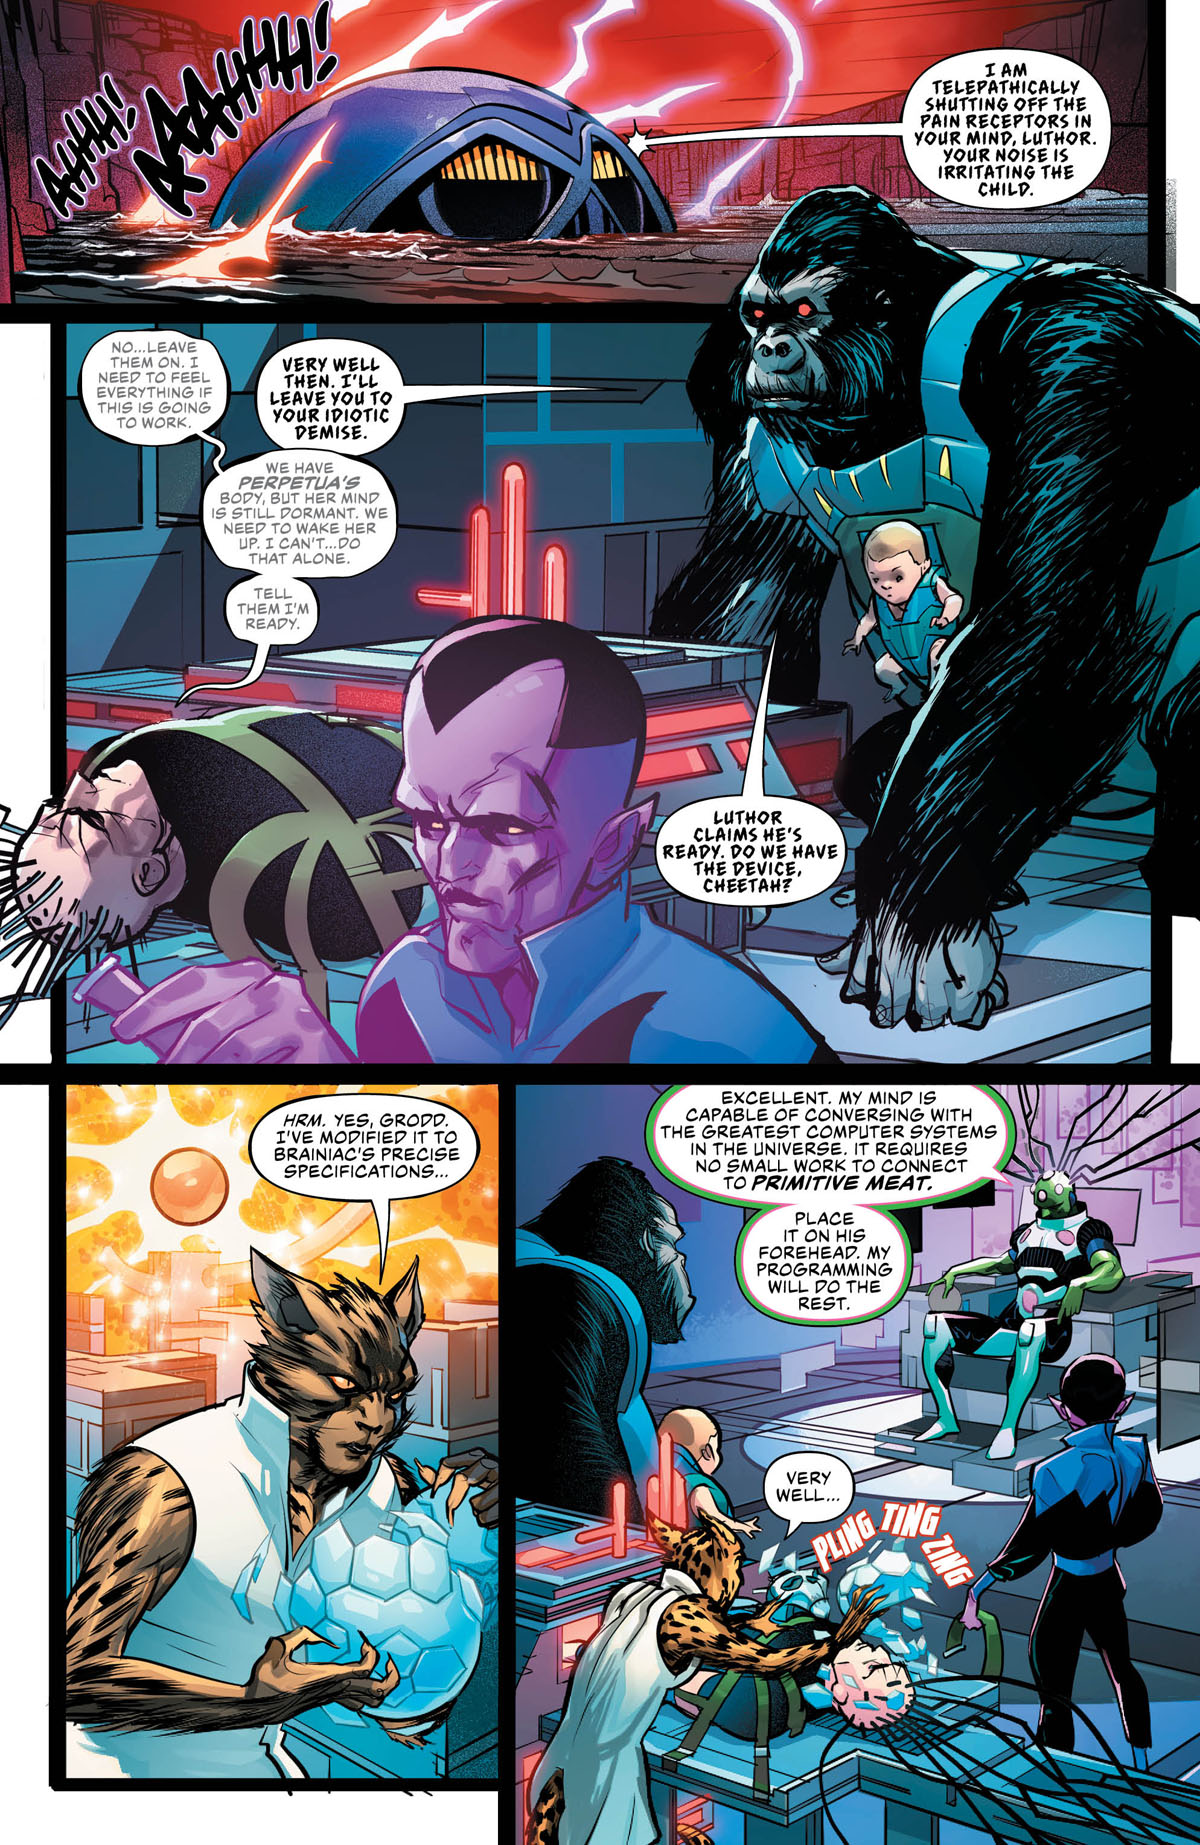 Justice League #18 page 2